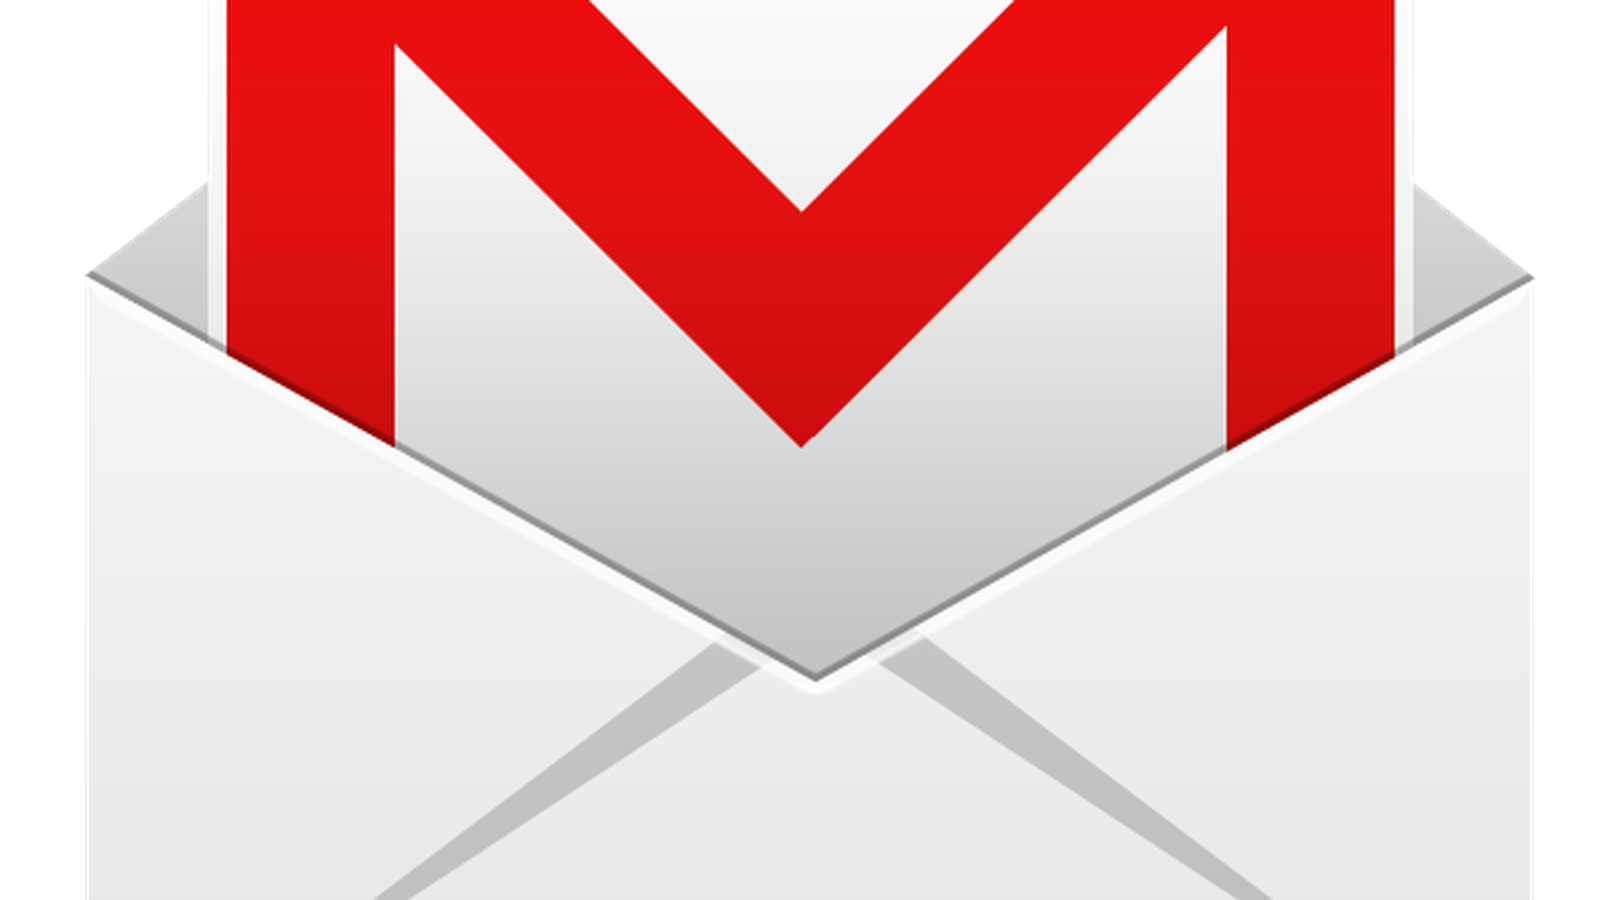 Download Free Account Google Attachment Email Notifier Gmail ICON favicon